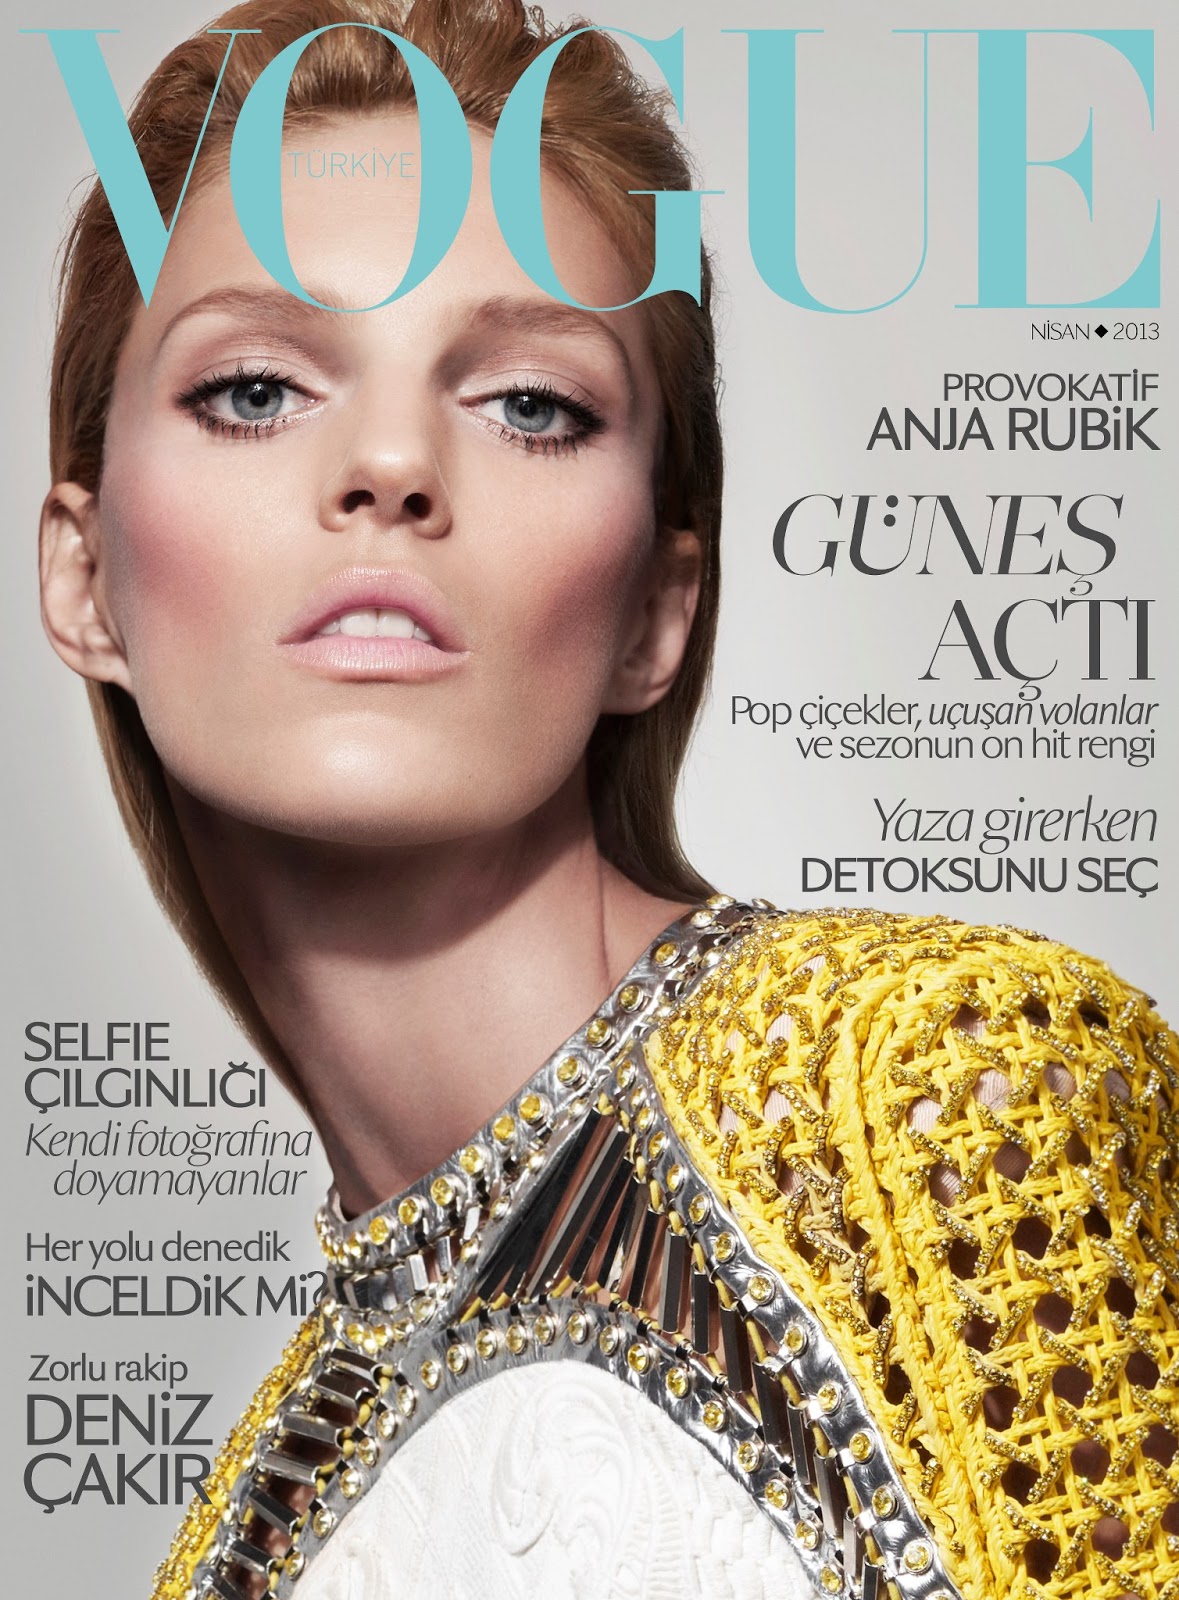 http://2.bp.blogspot.com/-PdywsYEzN8I/UVLYkndm7UI/AAAAAAABOt4/x9WbnpJ33e4/s1600/Vogue-Turkey-April-2013-Anja-Rubik-Magazine-Cover.jpg